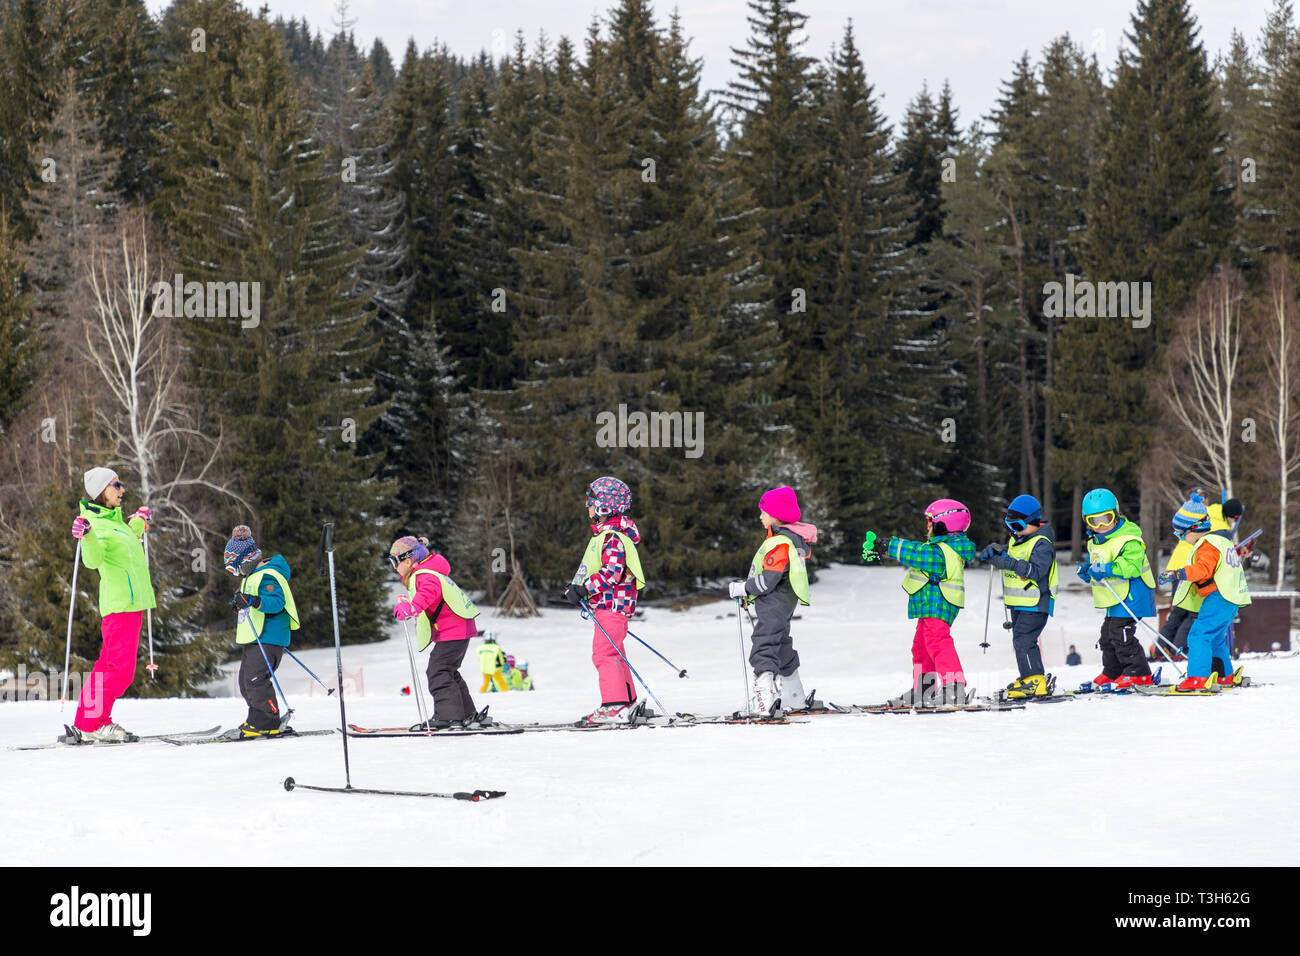 BULGARIA, SOFIA, VITOSHA - MARCH 15: Kids have fun during a ski school in Vitosha mountain, near Sofia, on March 15, 2019. Stock Photo